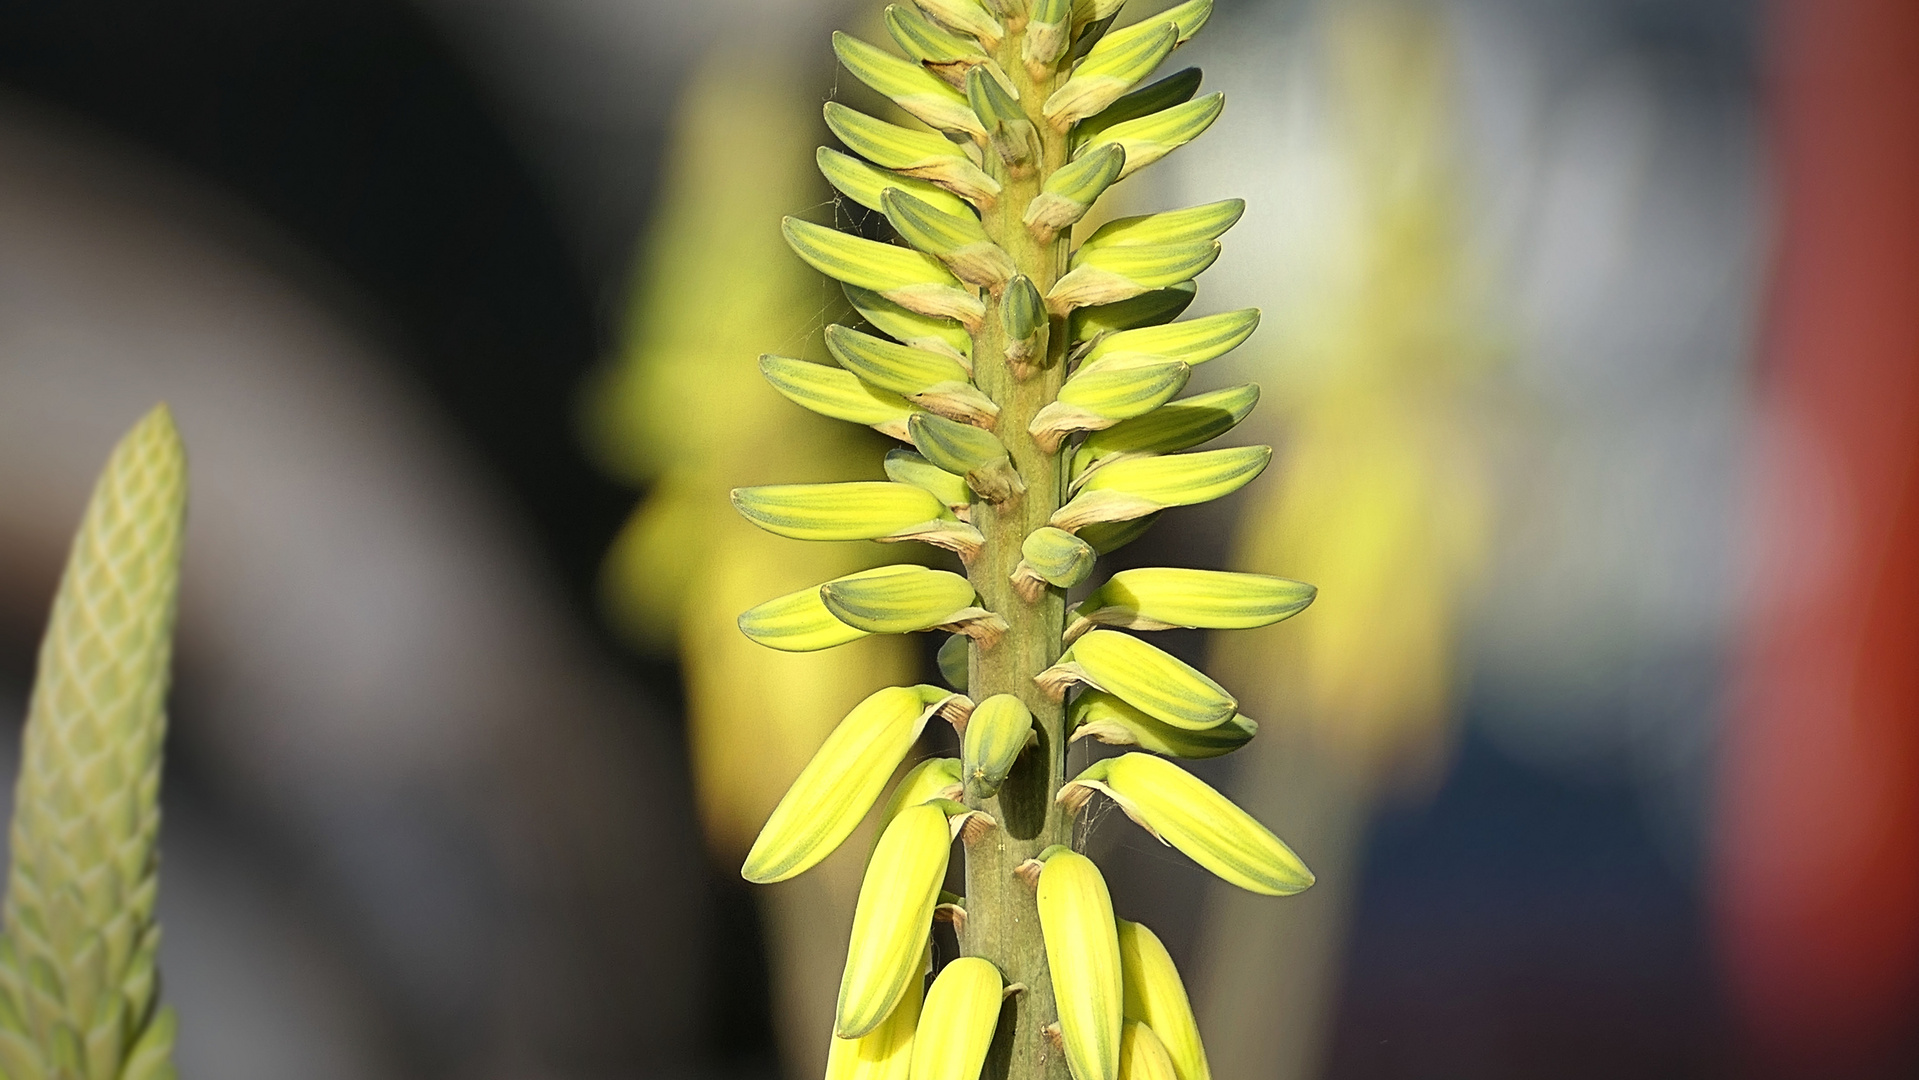 ... close up Aloe vera yellow flower 